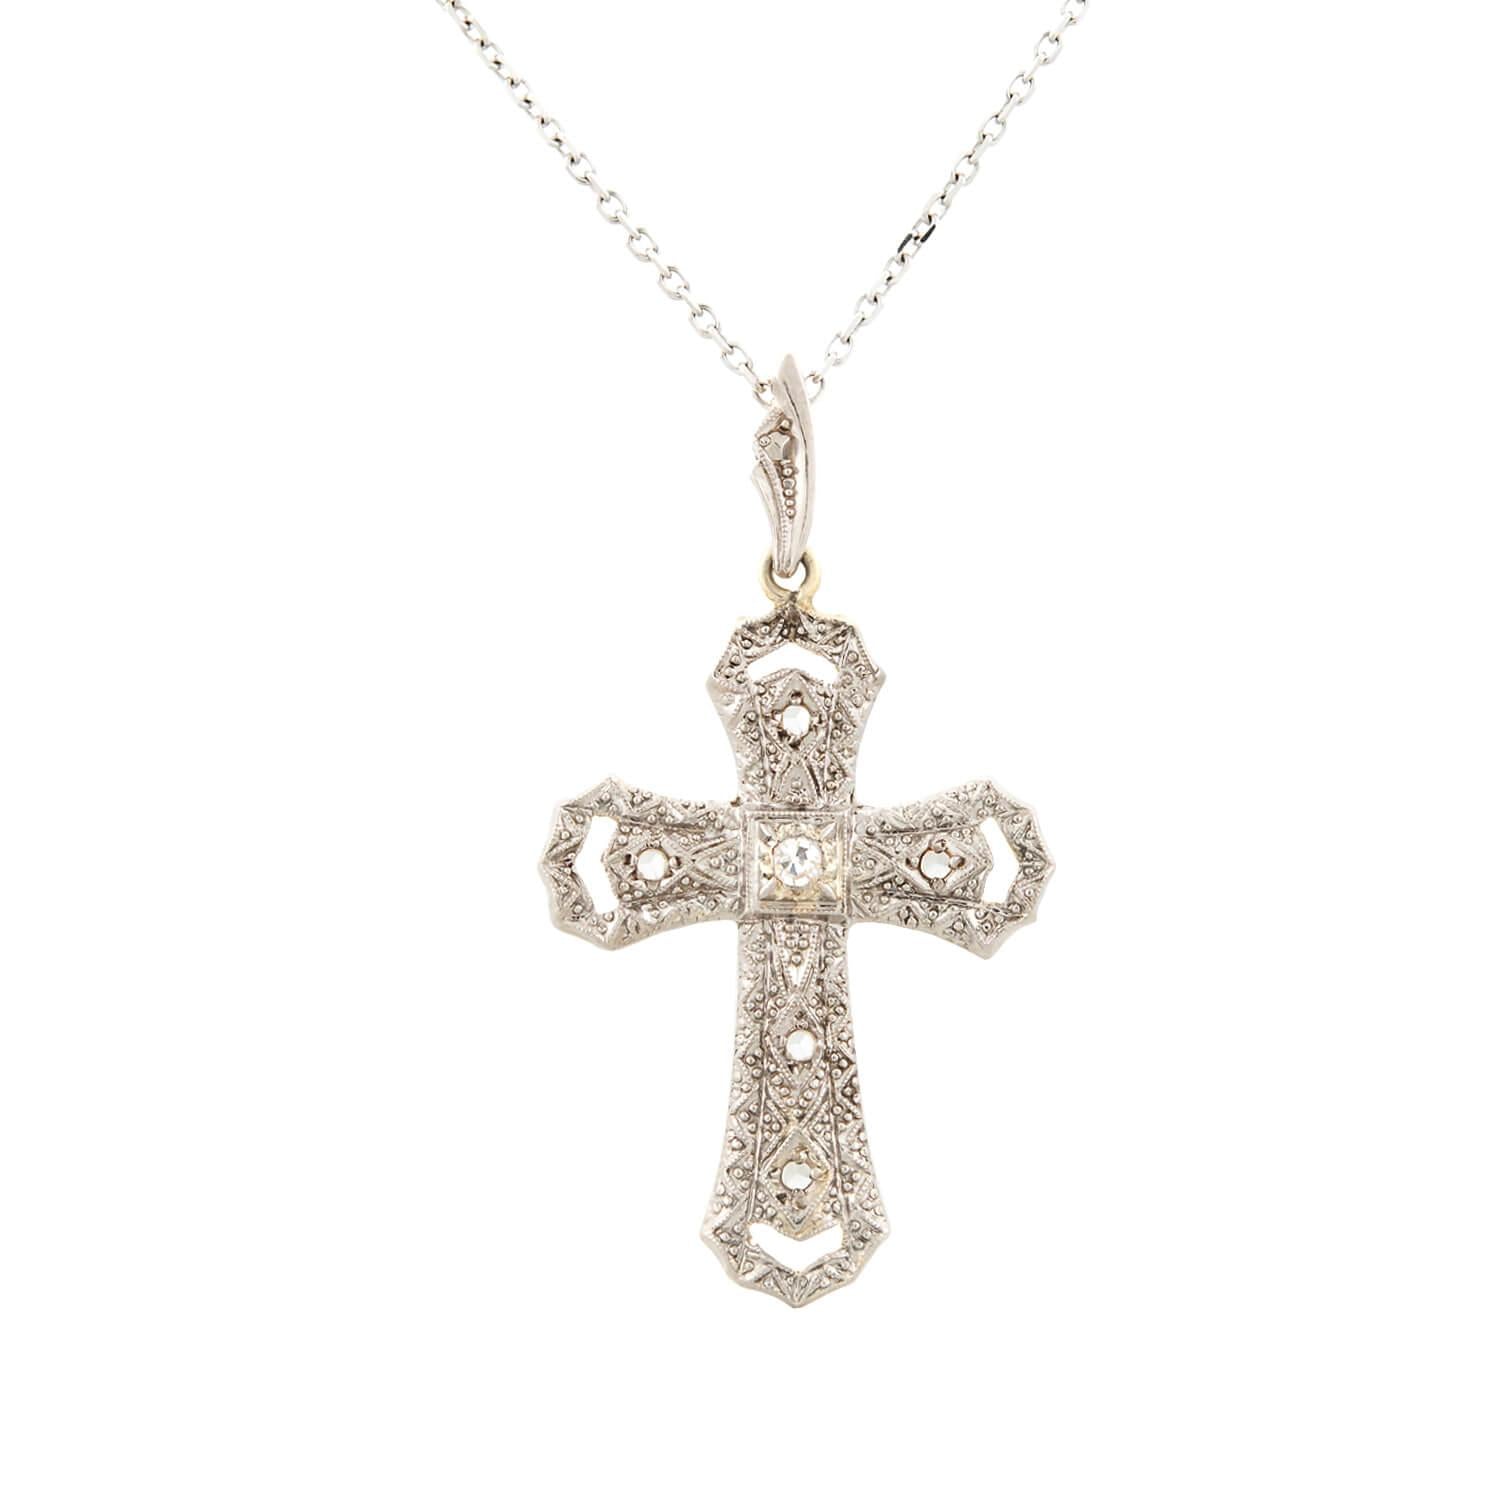 Edwardian 14k and Diamond Cross Pendant Necklace